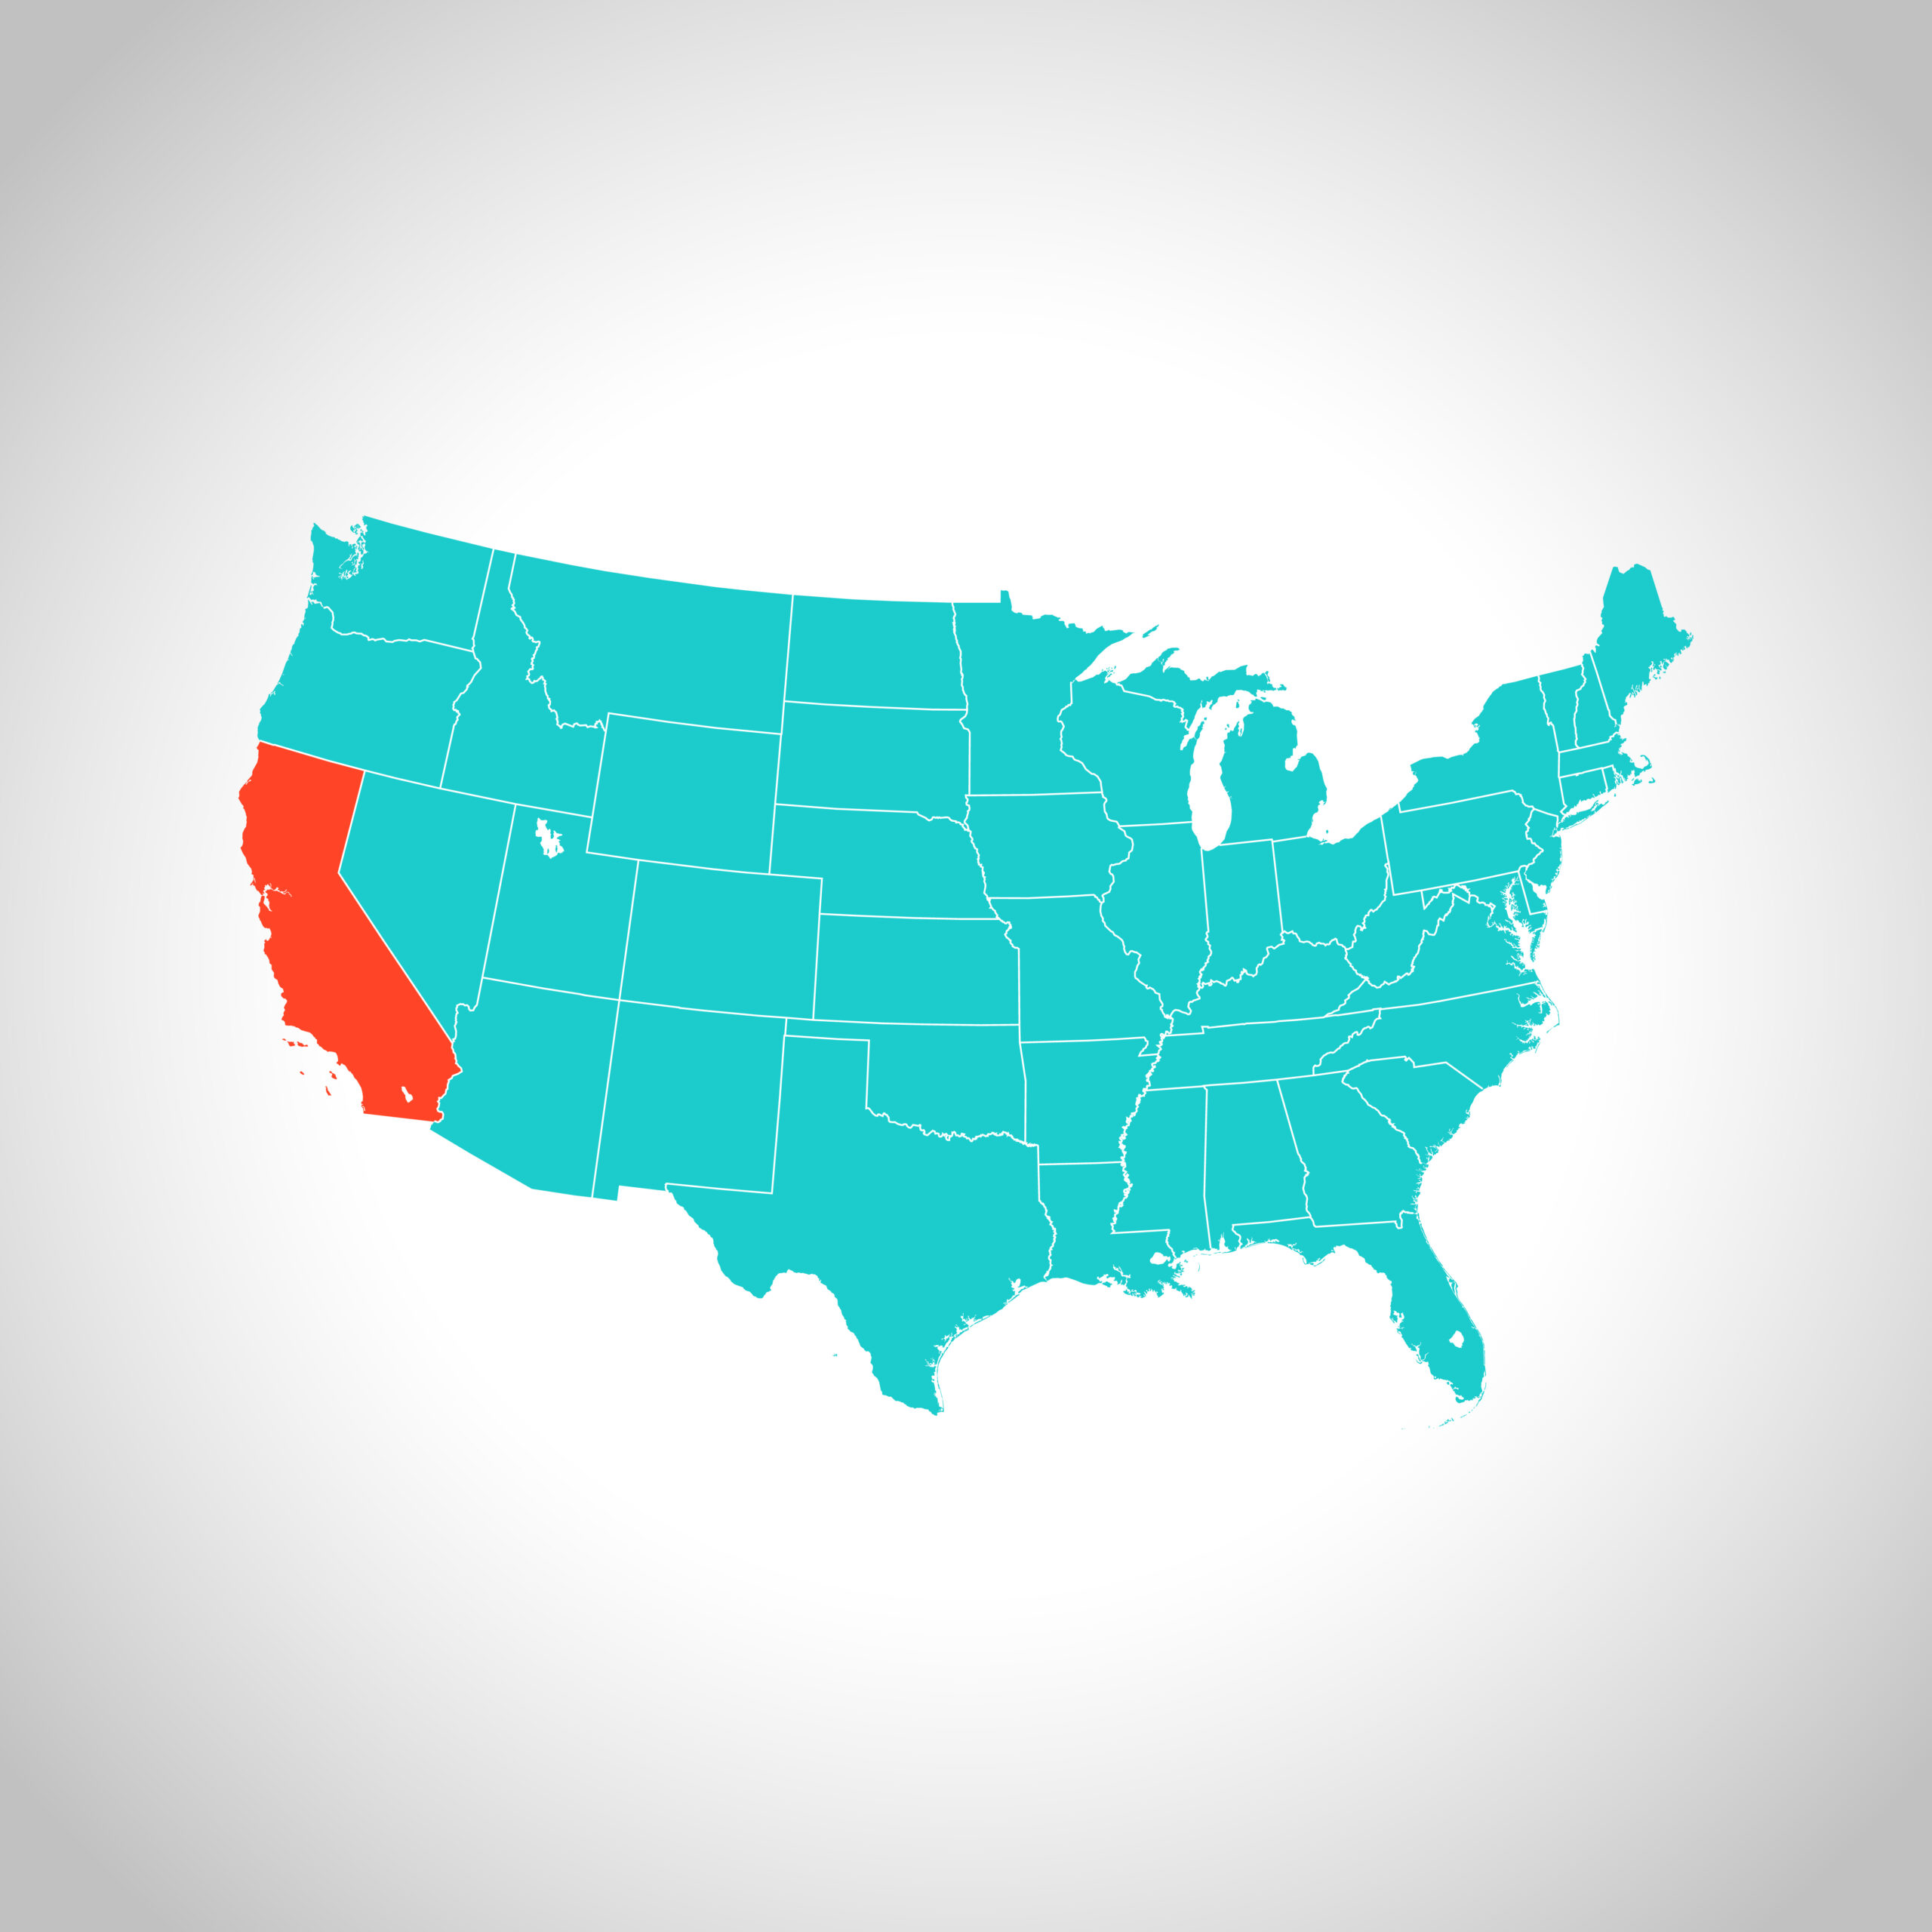 Workforce Data Explained: Using Data to Narrow California Skills Gaps